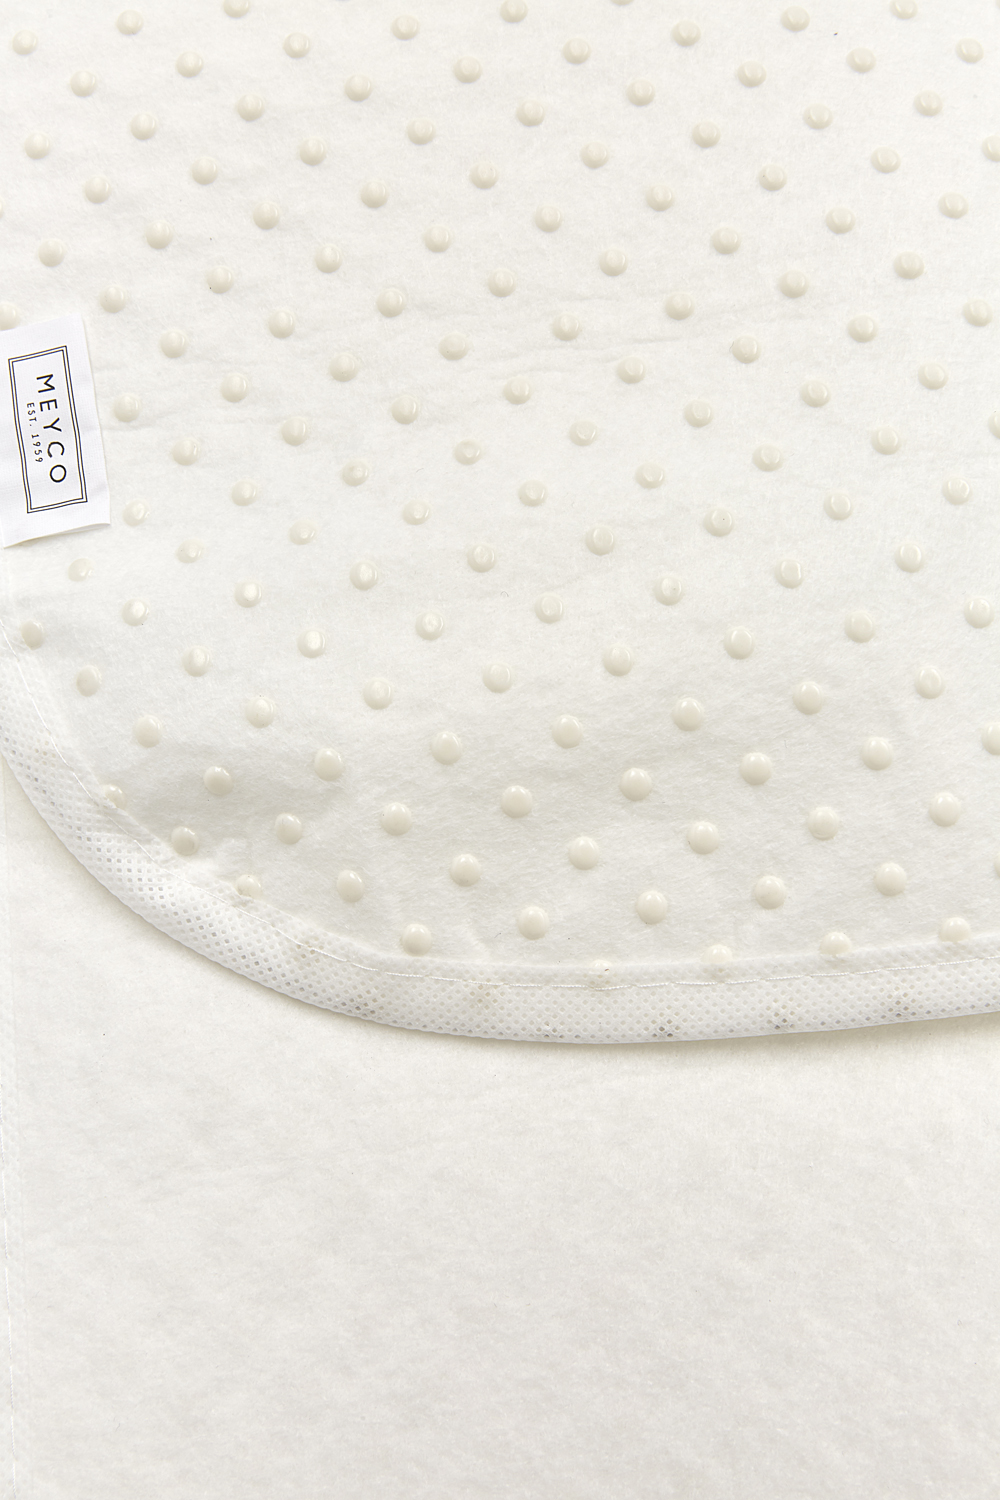 Non-slip mattress pad juniorbed - white - 70x140cm